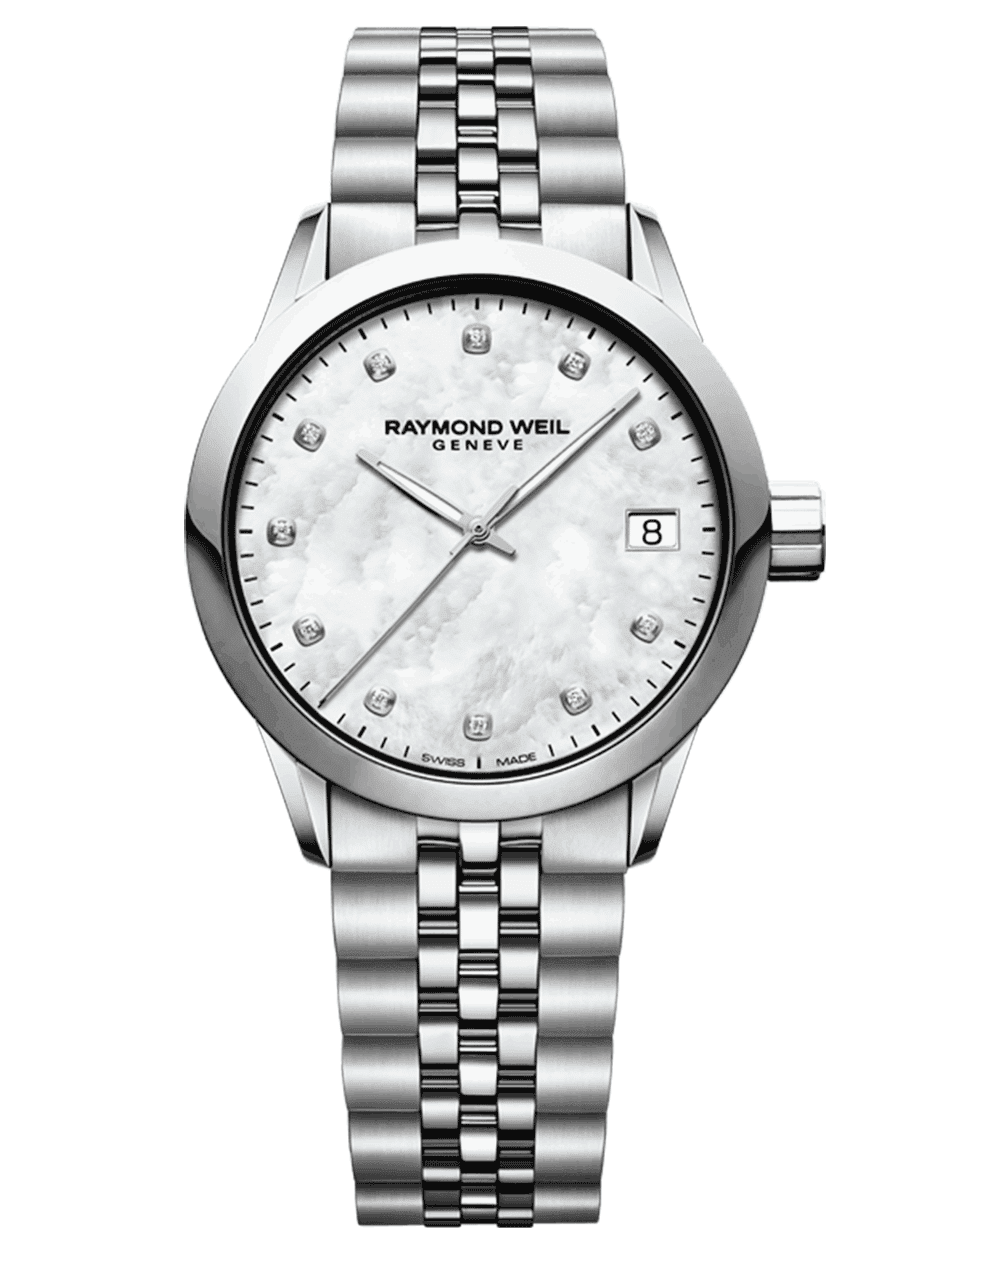 Replication Franck Muller Watch